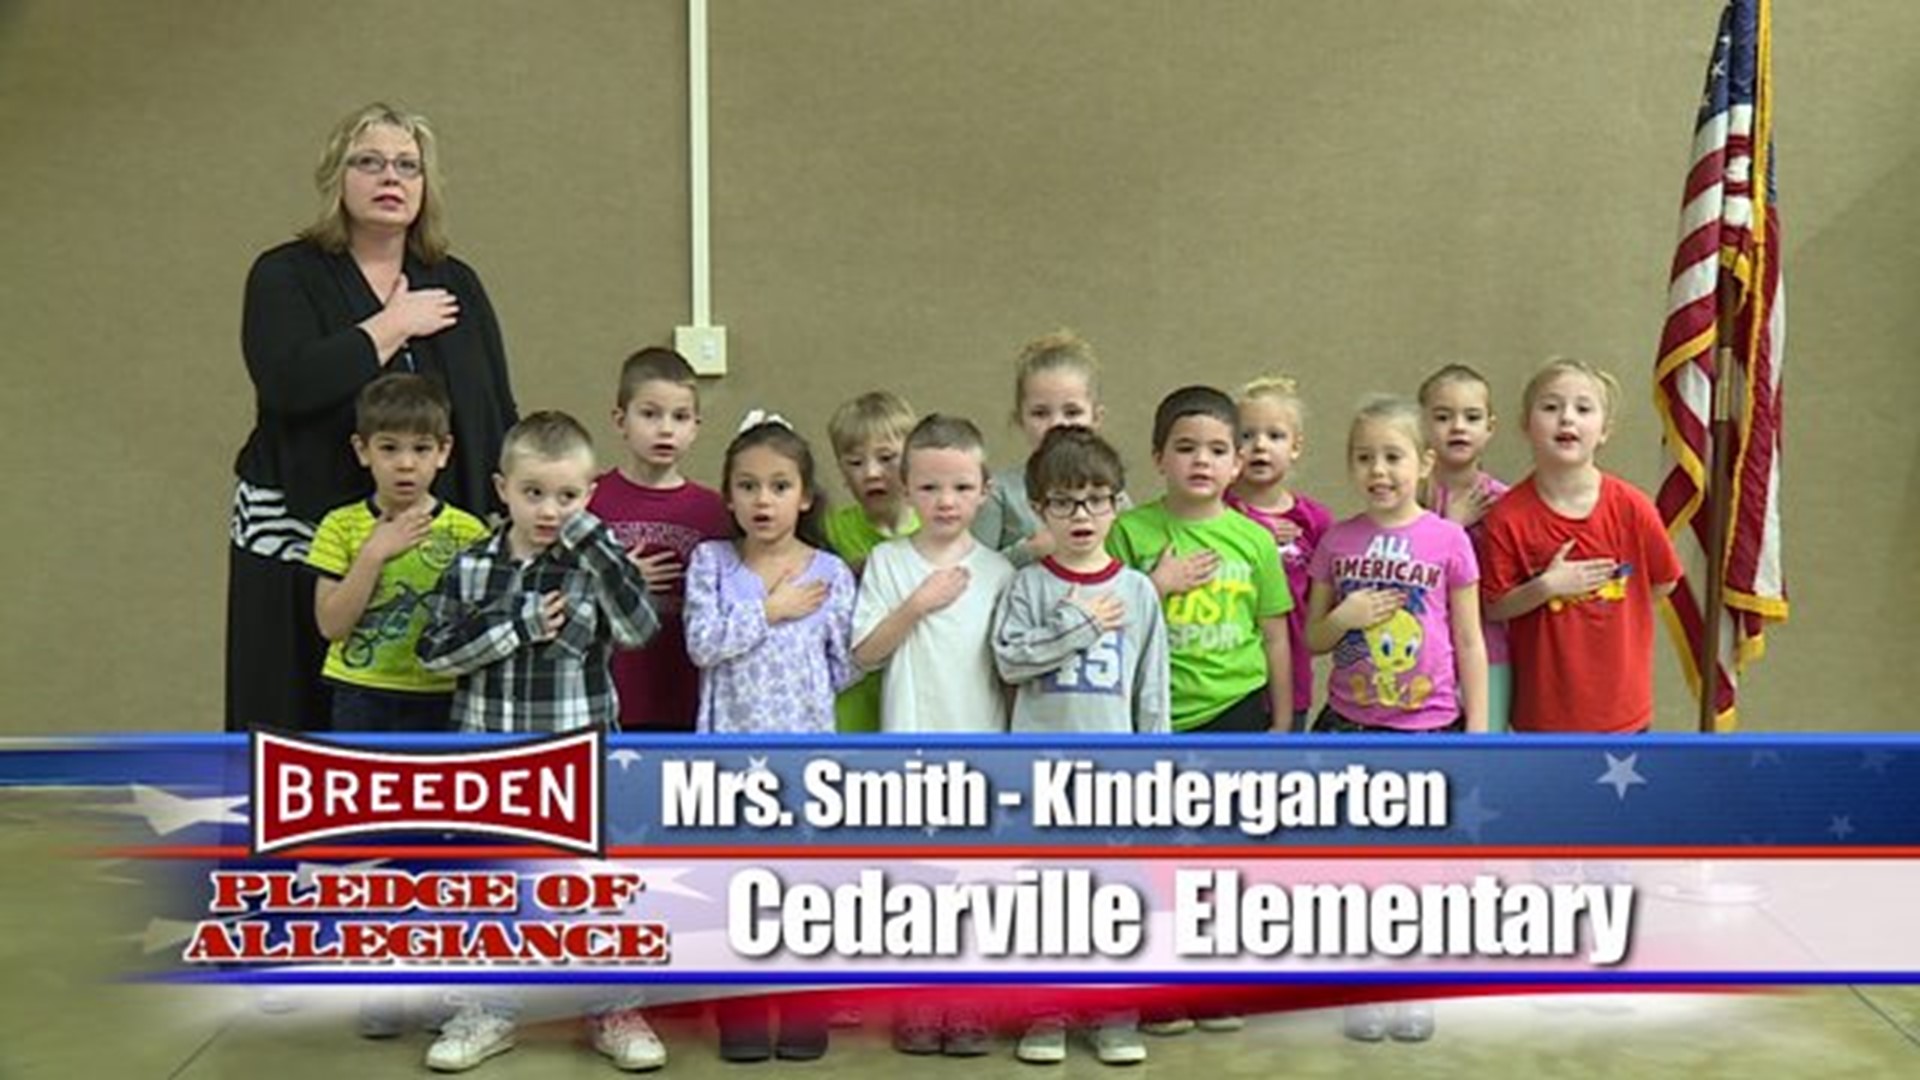 Cedarville Elementary, Mrs. Smith - Kindergarten